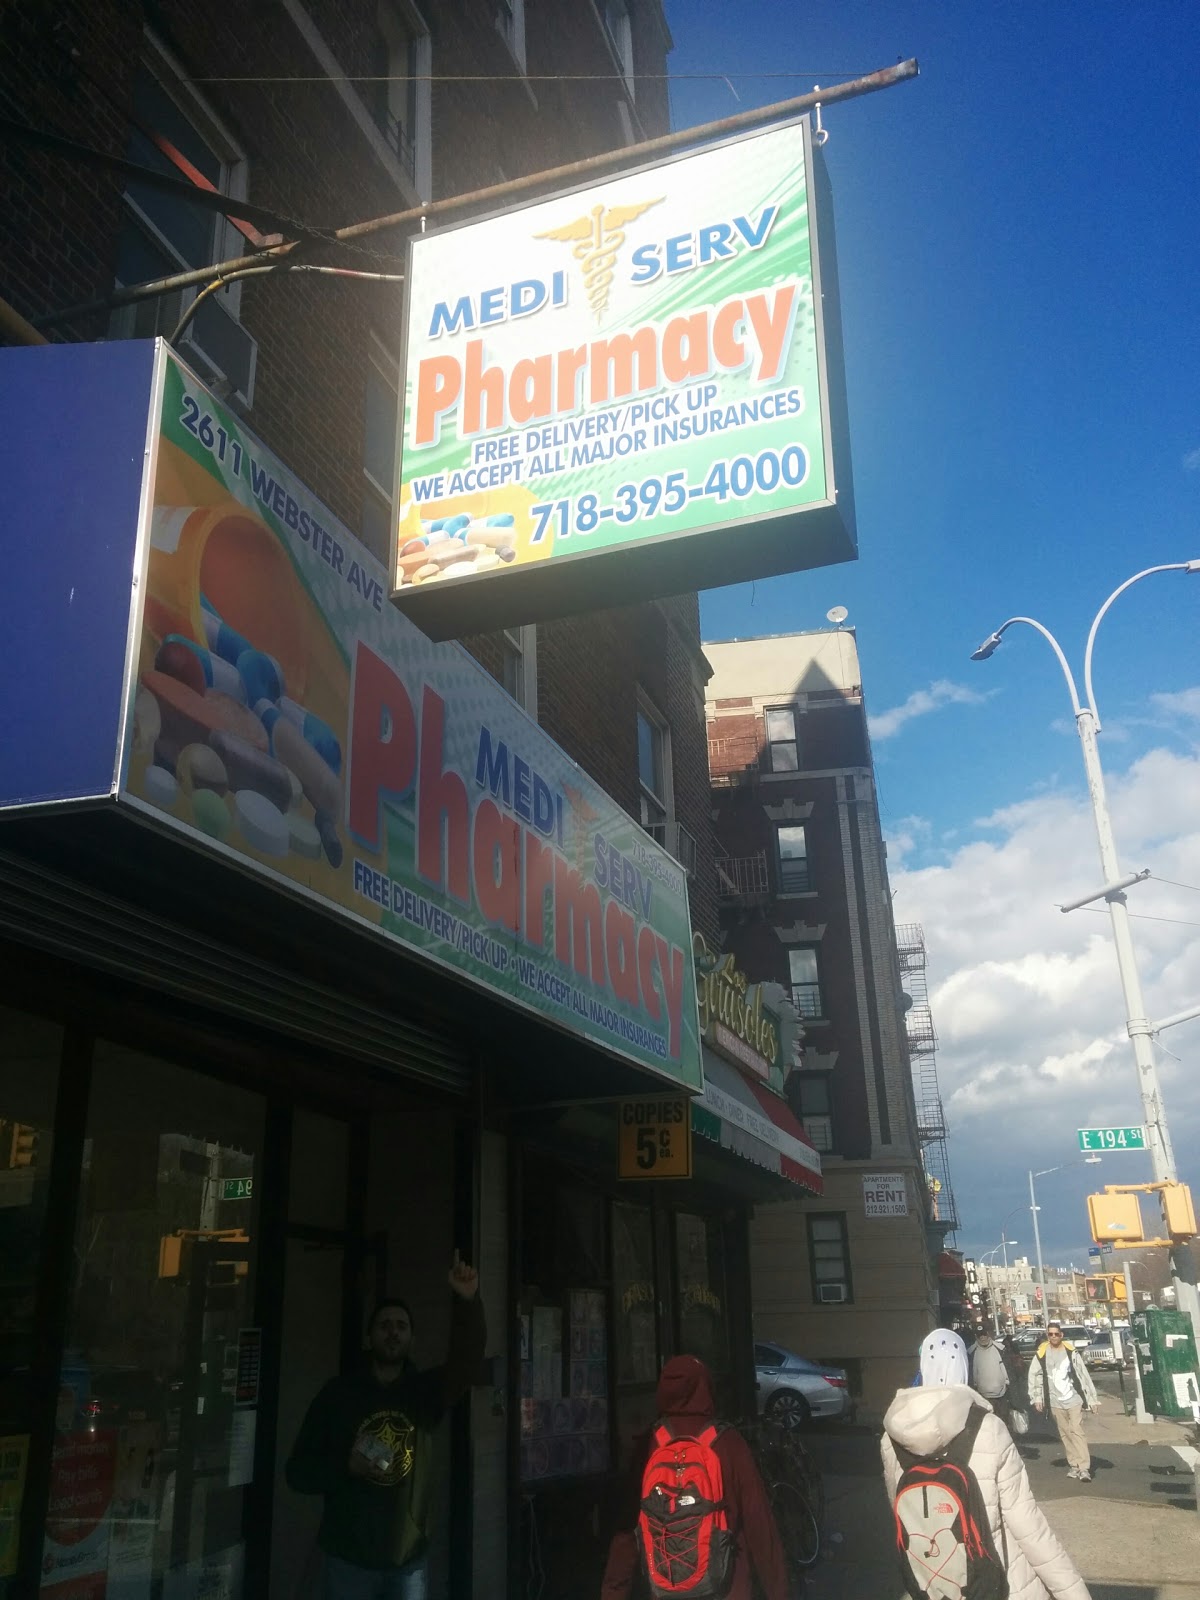 Photo of Medi Serv Pharmacy in New York City, New York, United States - 3 Picture of Point of interest, Establishment, Store, Health, Pharmacy